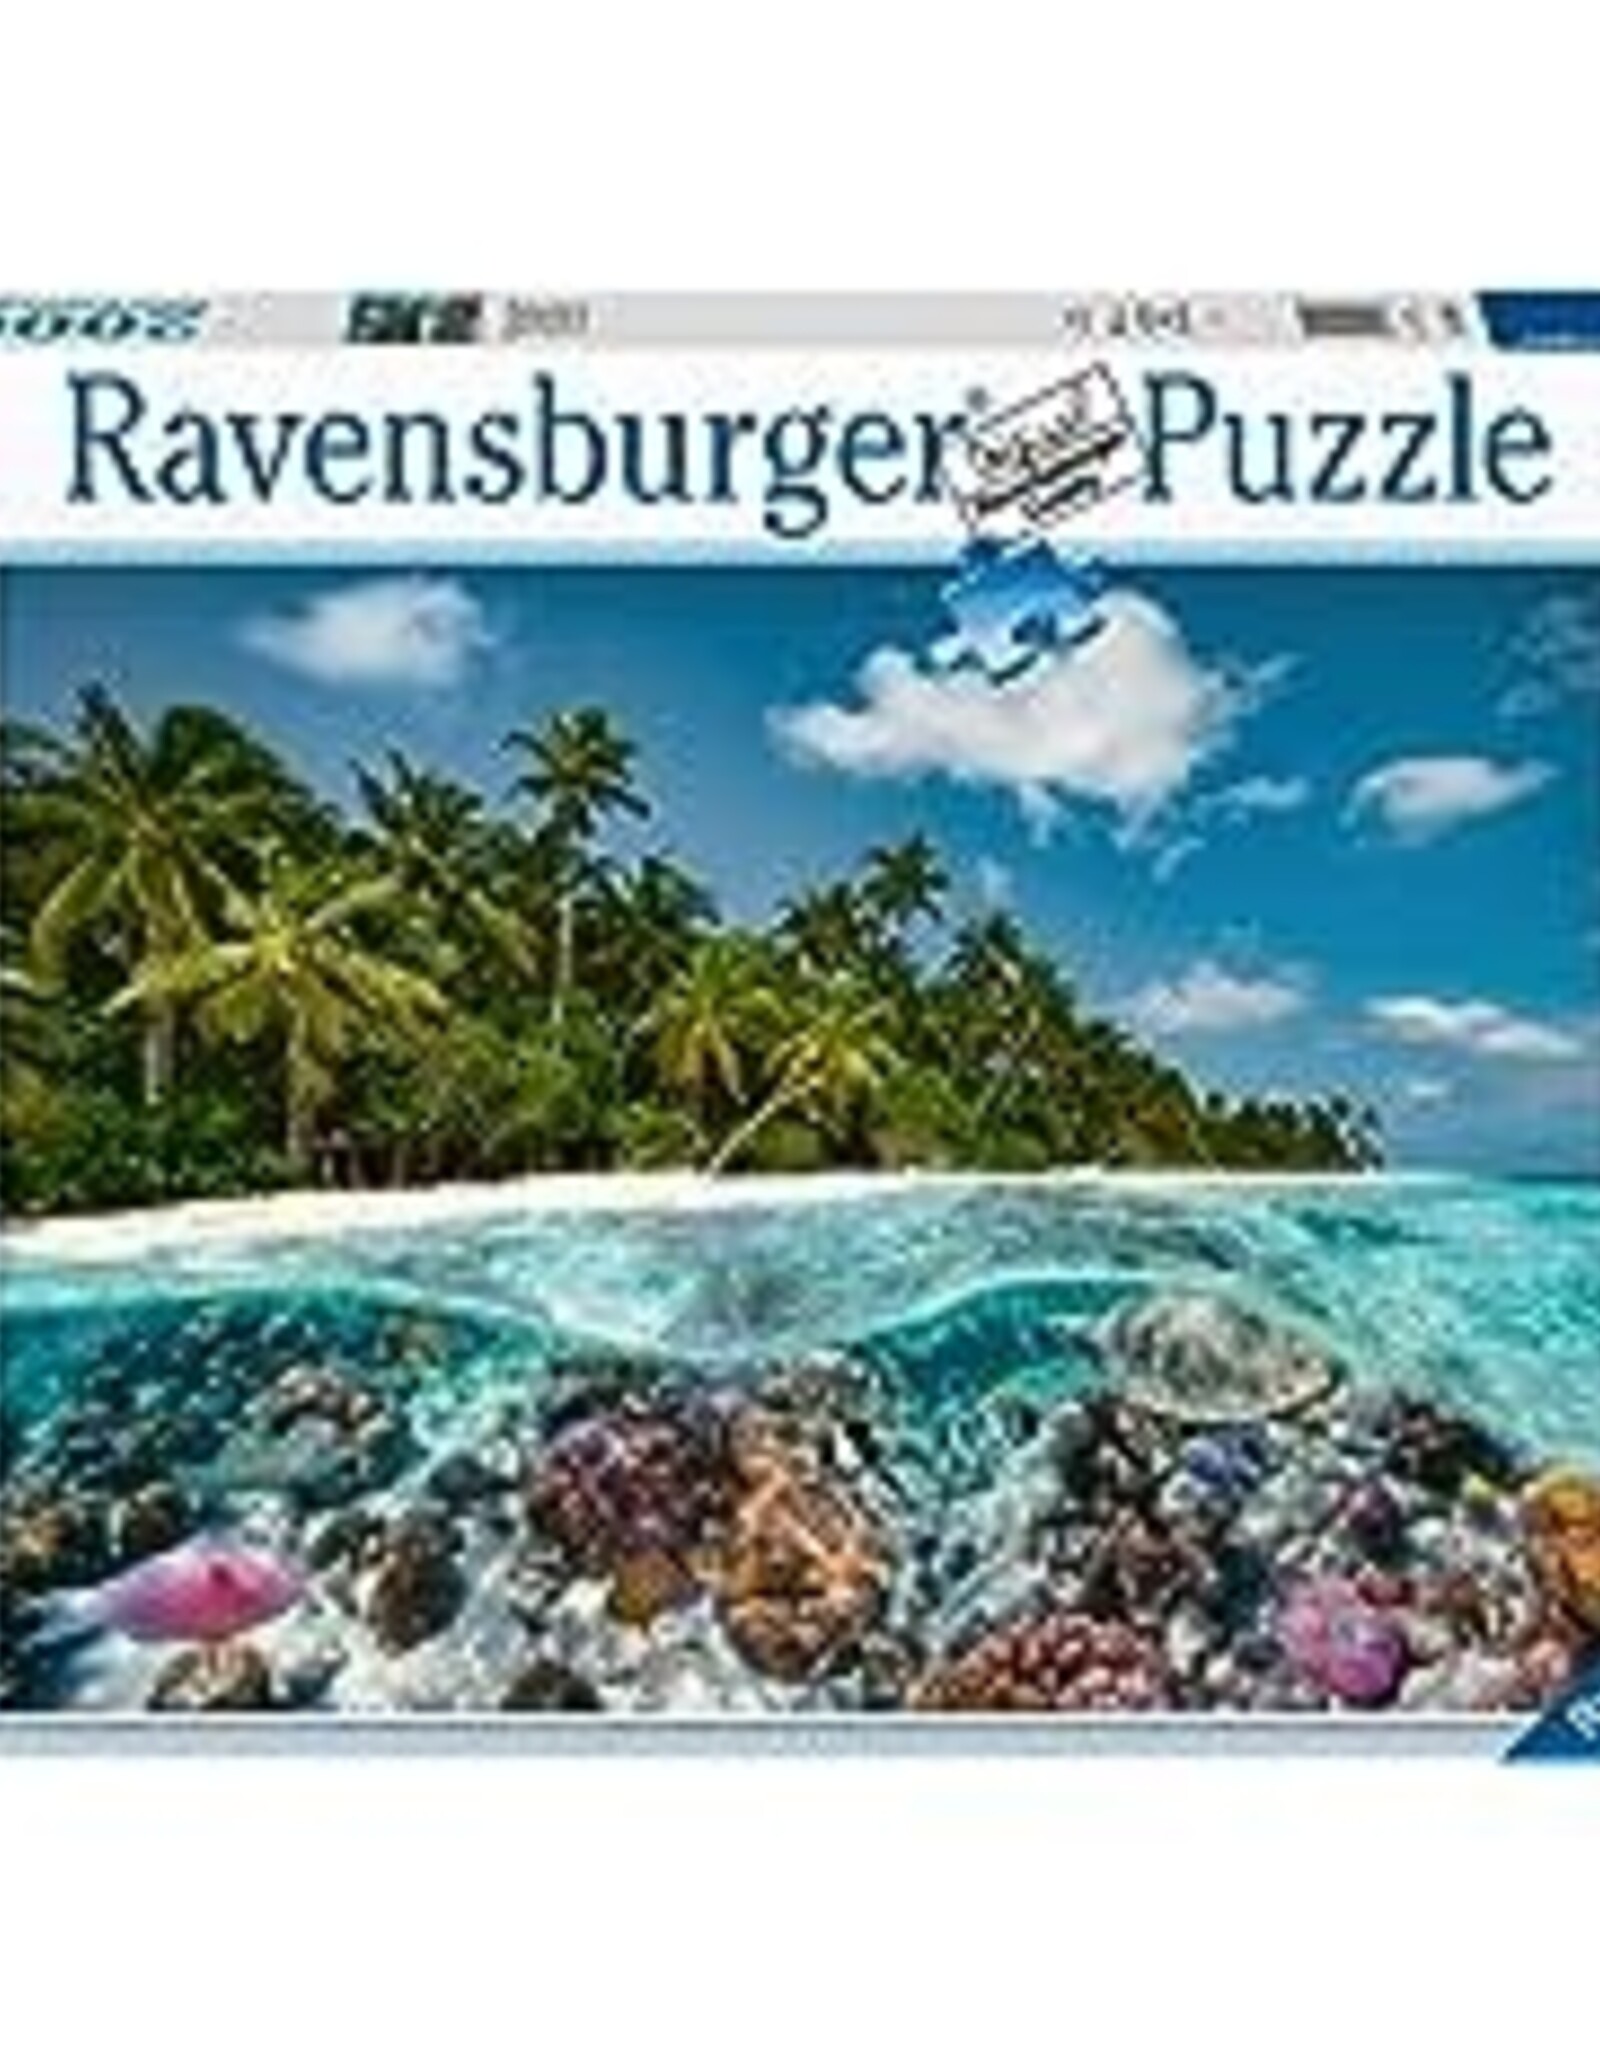 Ravensburger 2000pc Puzzle - A Dive in the Maldives